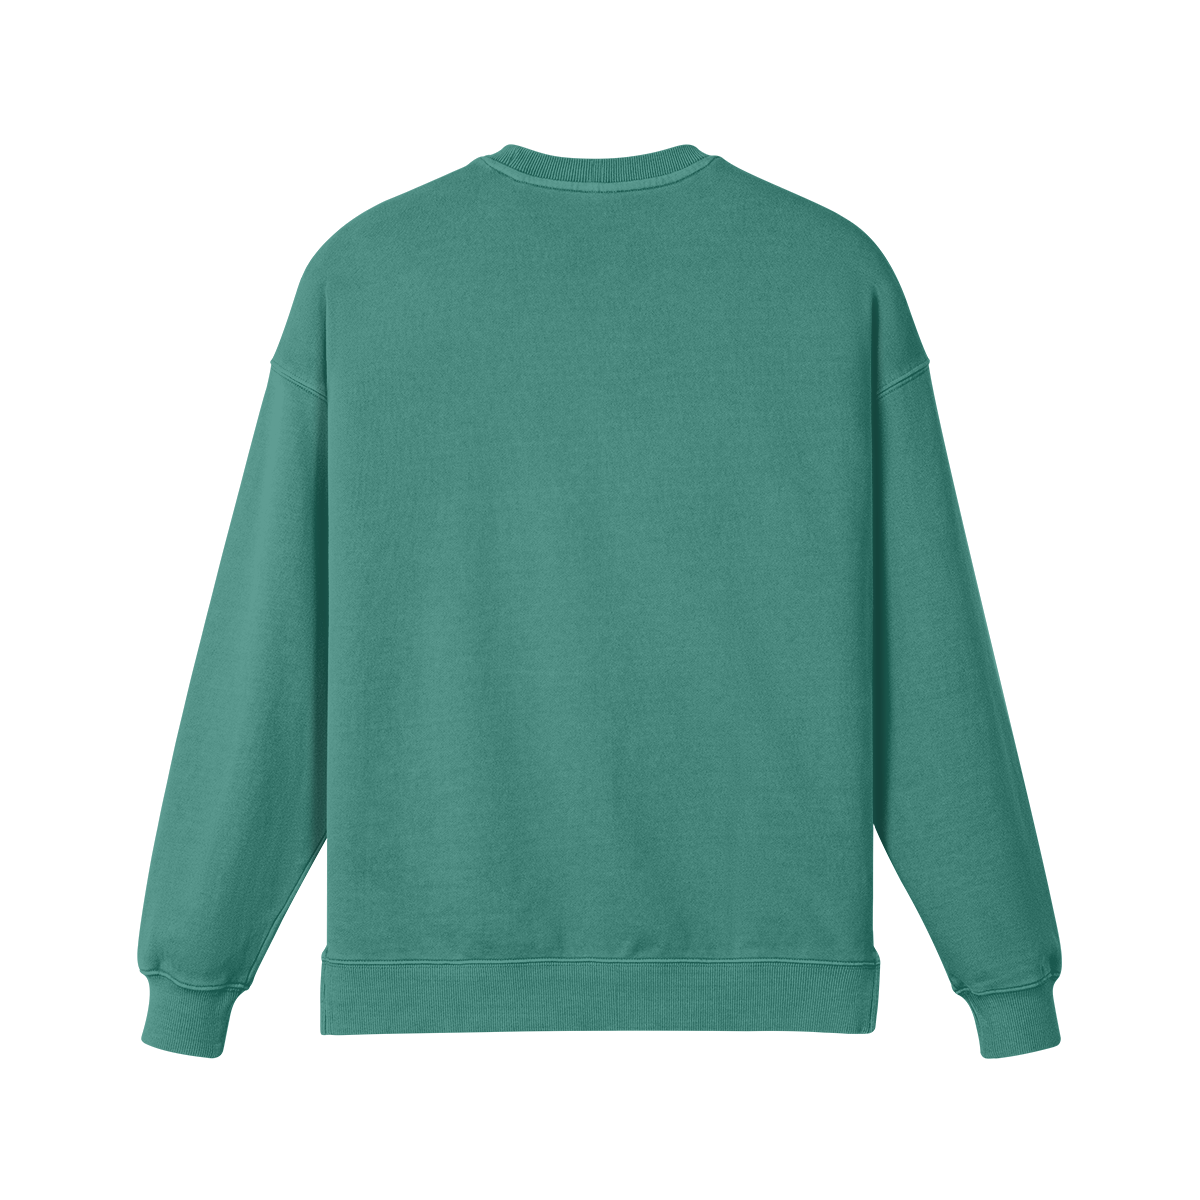 Bird Machine Merch - Unisex Oversized Faded Sweatshirt (Winter Green)